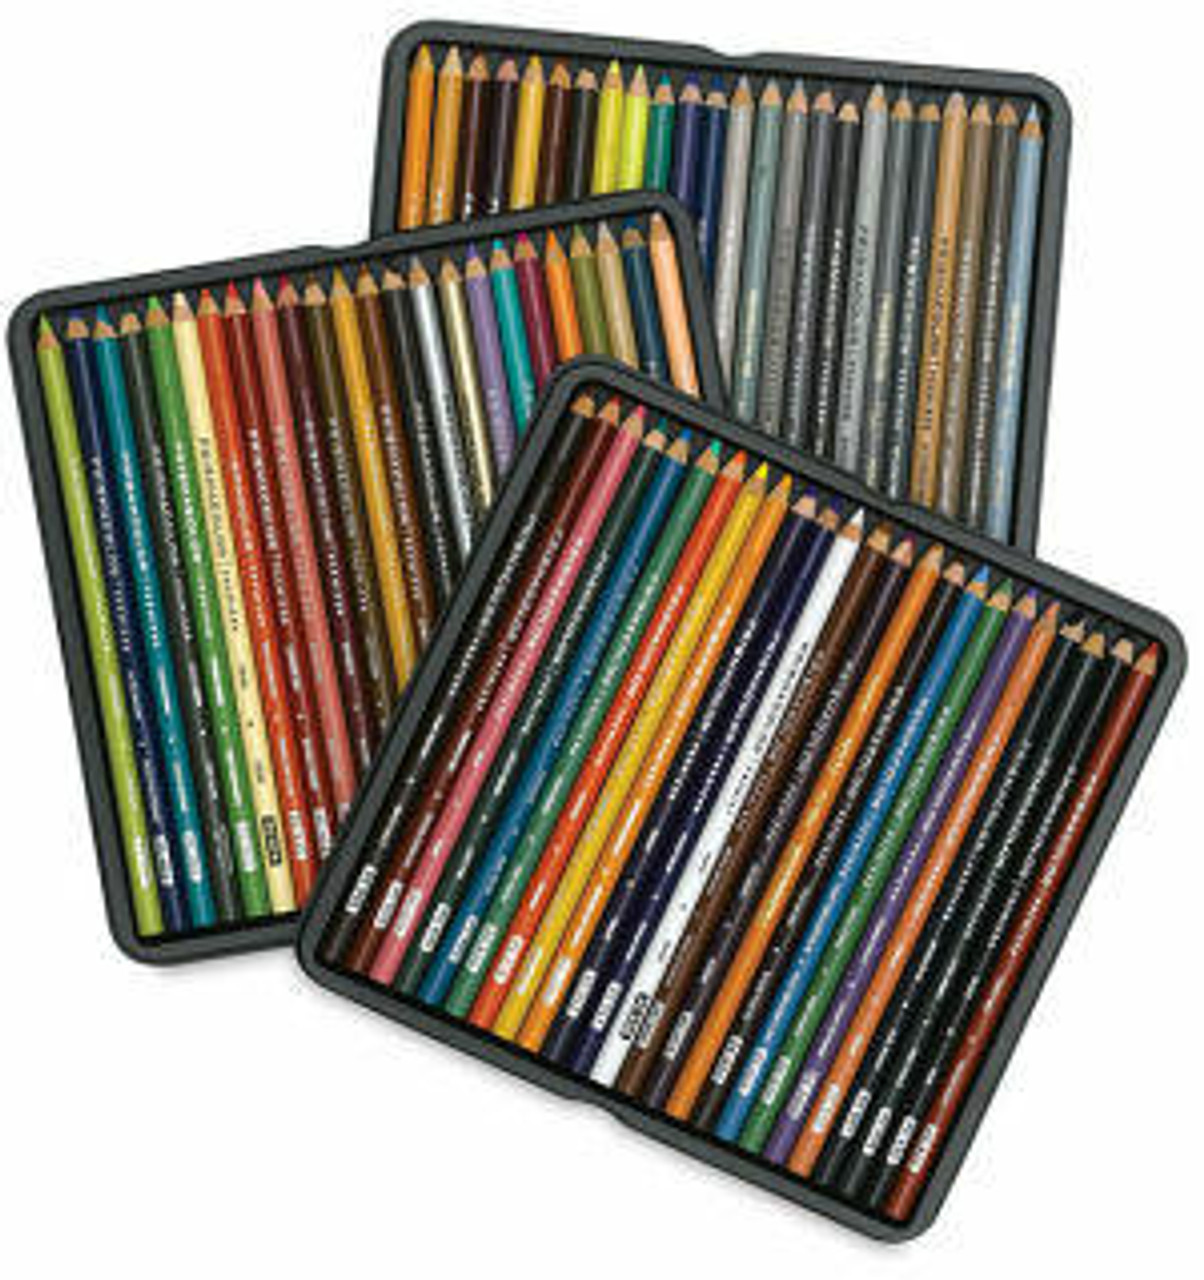 https://cdn11.bigcommerce.com/s-9uf88xhege/images/stencil/1280x1280/products/626/49058/sanford-prismacolor-premier-thick-core-colored-pencil-72-set__73075.1689964674.jpg?c=1?imbypass=on